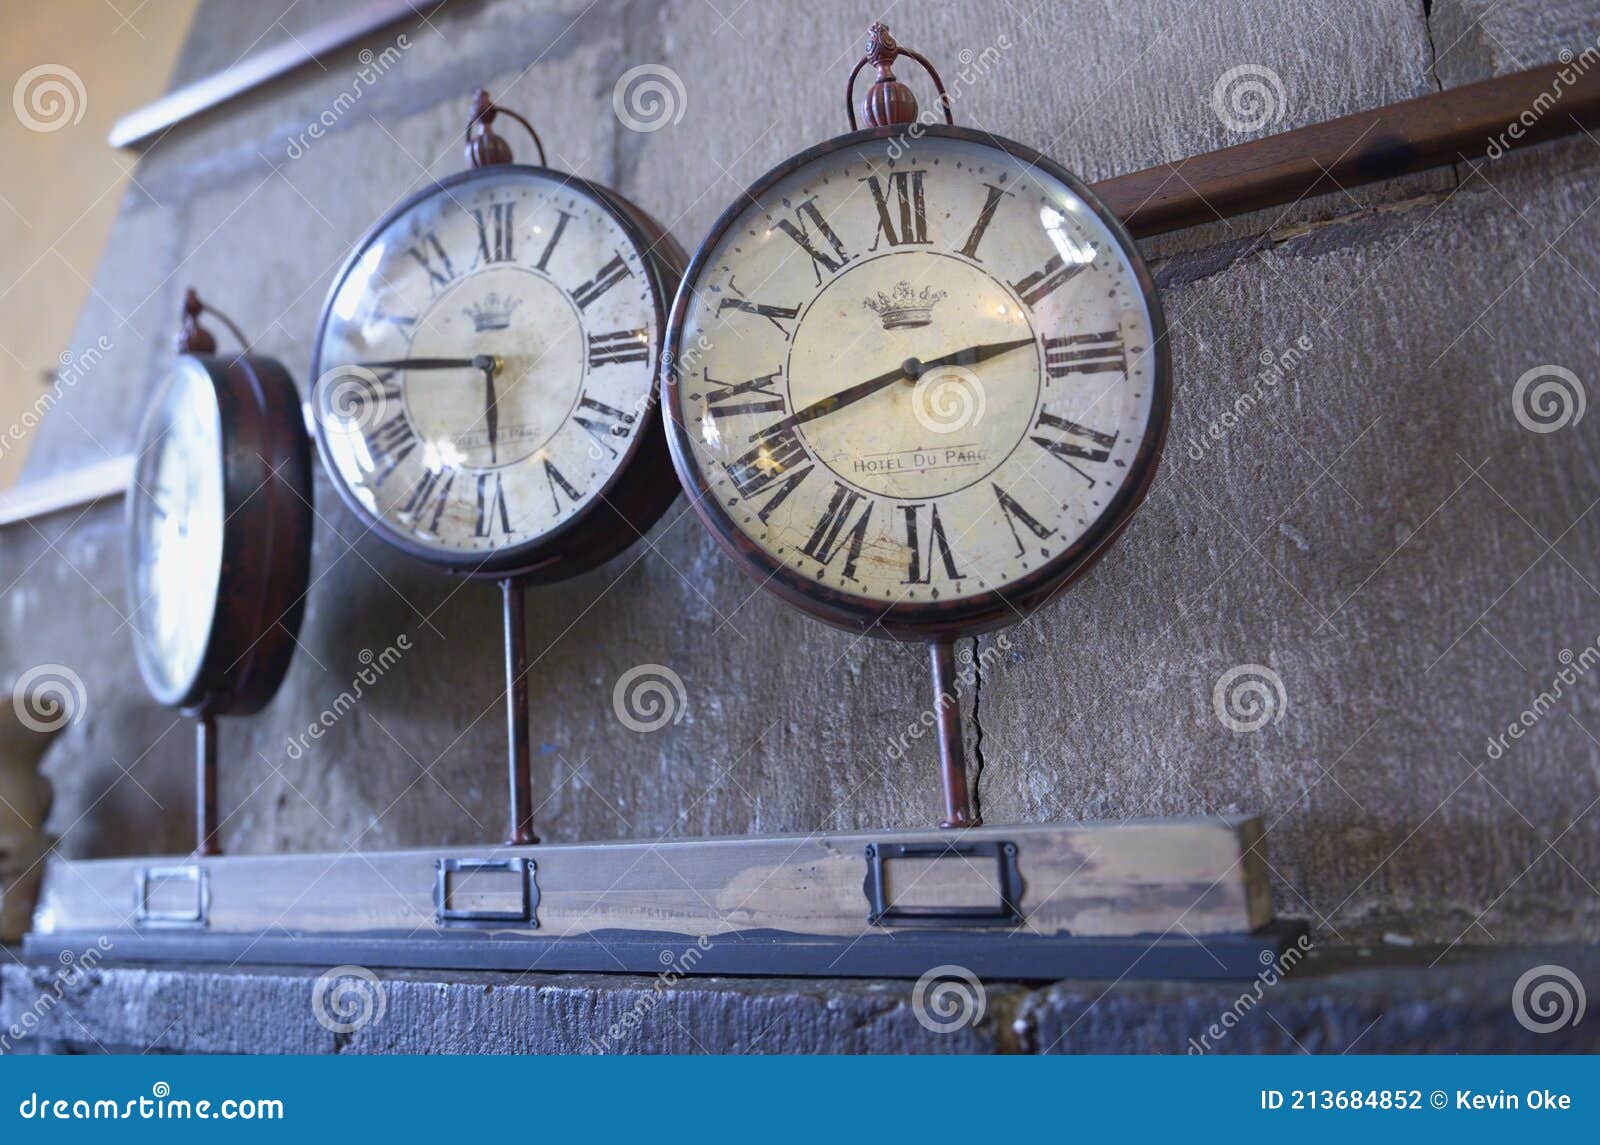 clocks on the mantle at cafe cultura, robles y reina victoria esquina, quito, ec